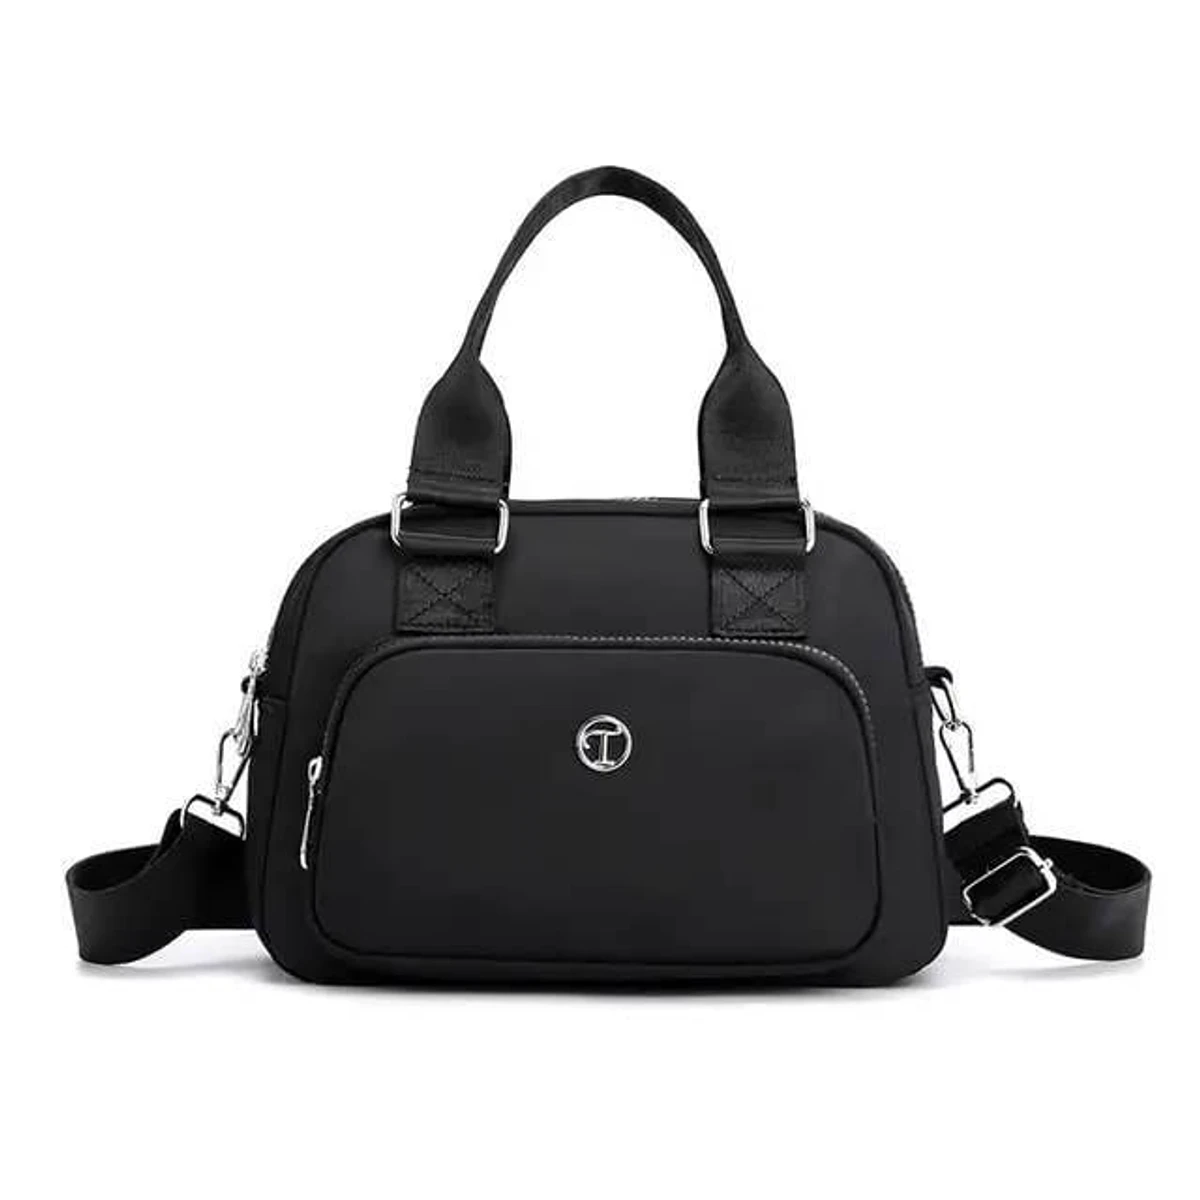 Large Capacity Fashionbag ( black color )